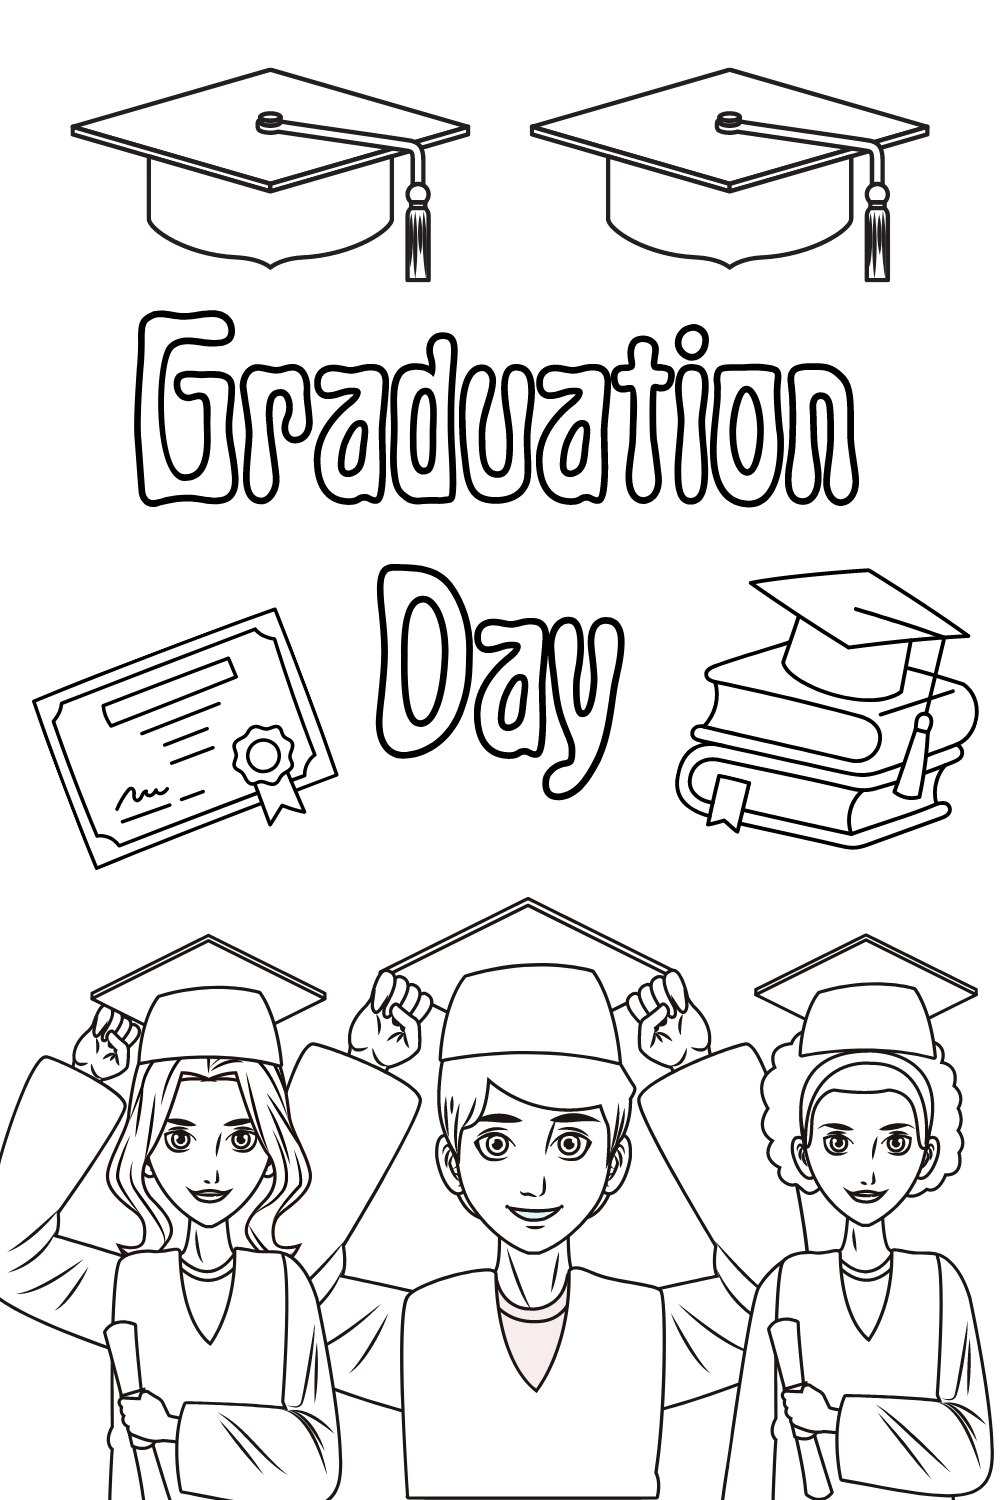 Cute graduation coloring pages including graduation gnomes